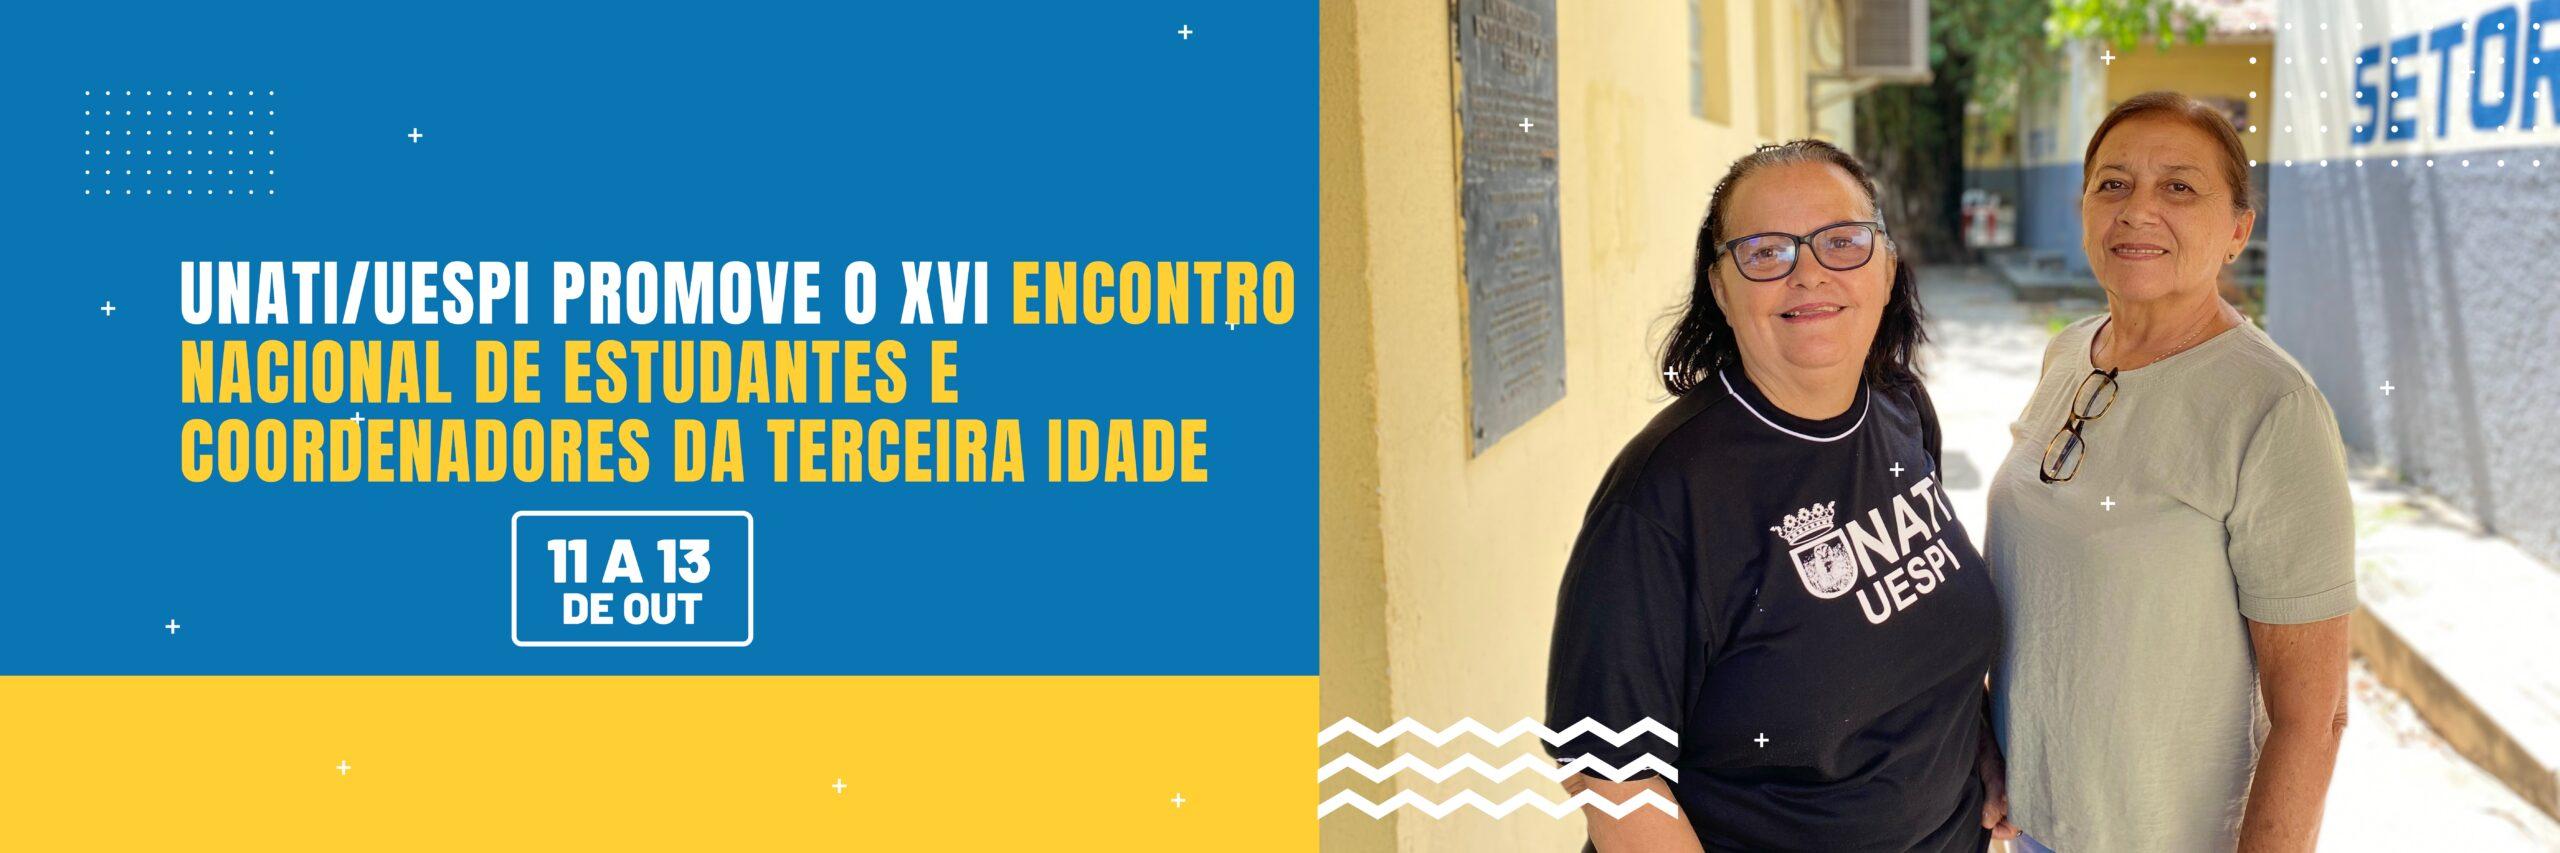 Cristina Mendes - Coordenador e Gestora Educacional no Centro